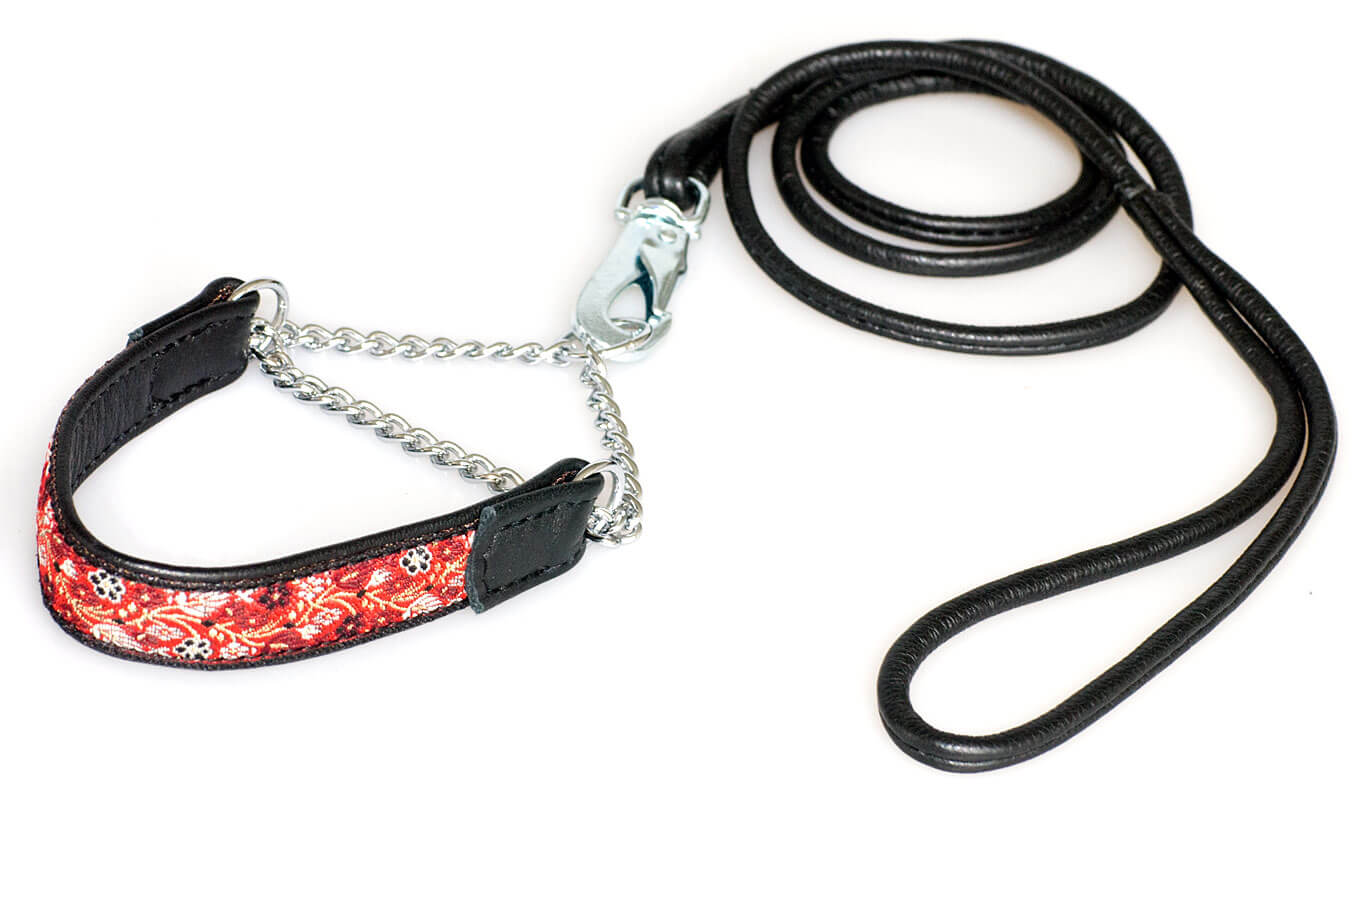 Premium dog show set with ribbon martingale collar